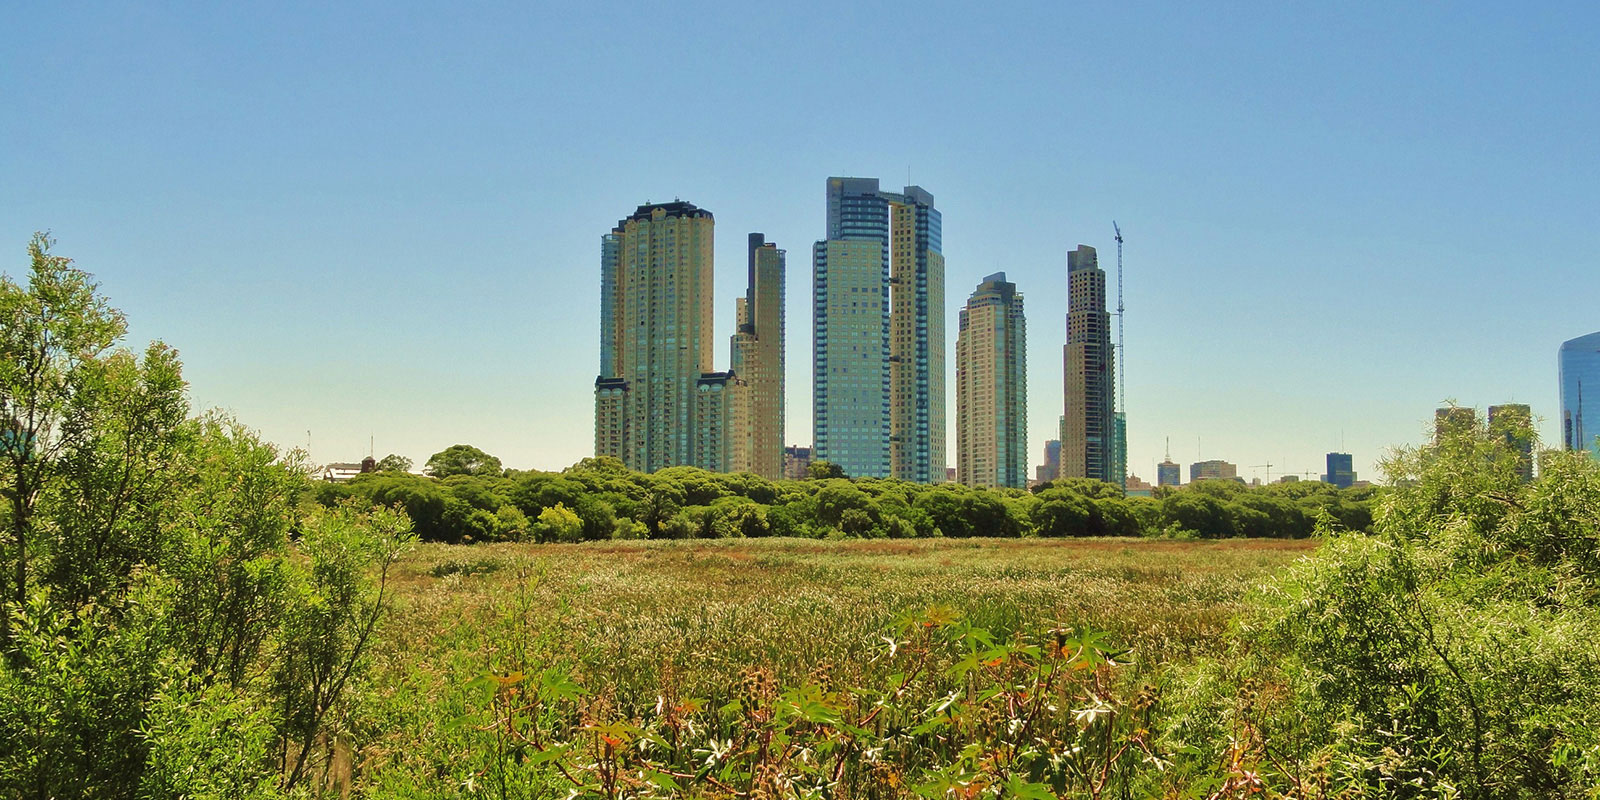 Reserva ecológica costanera, Buenos Aires